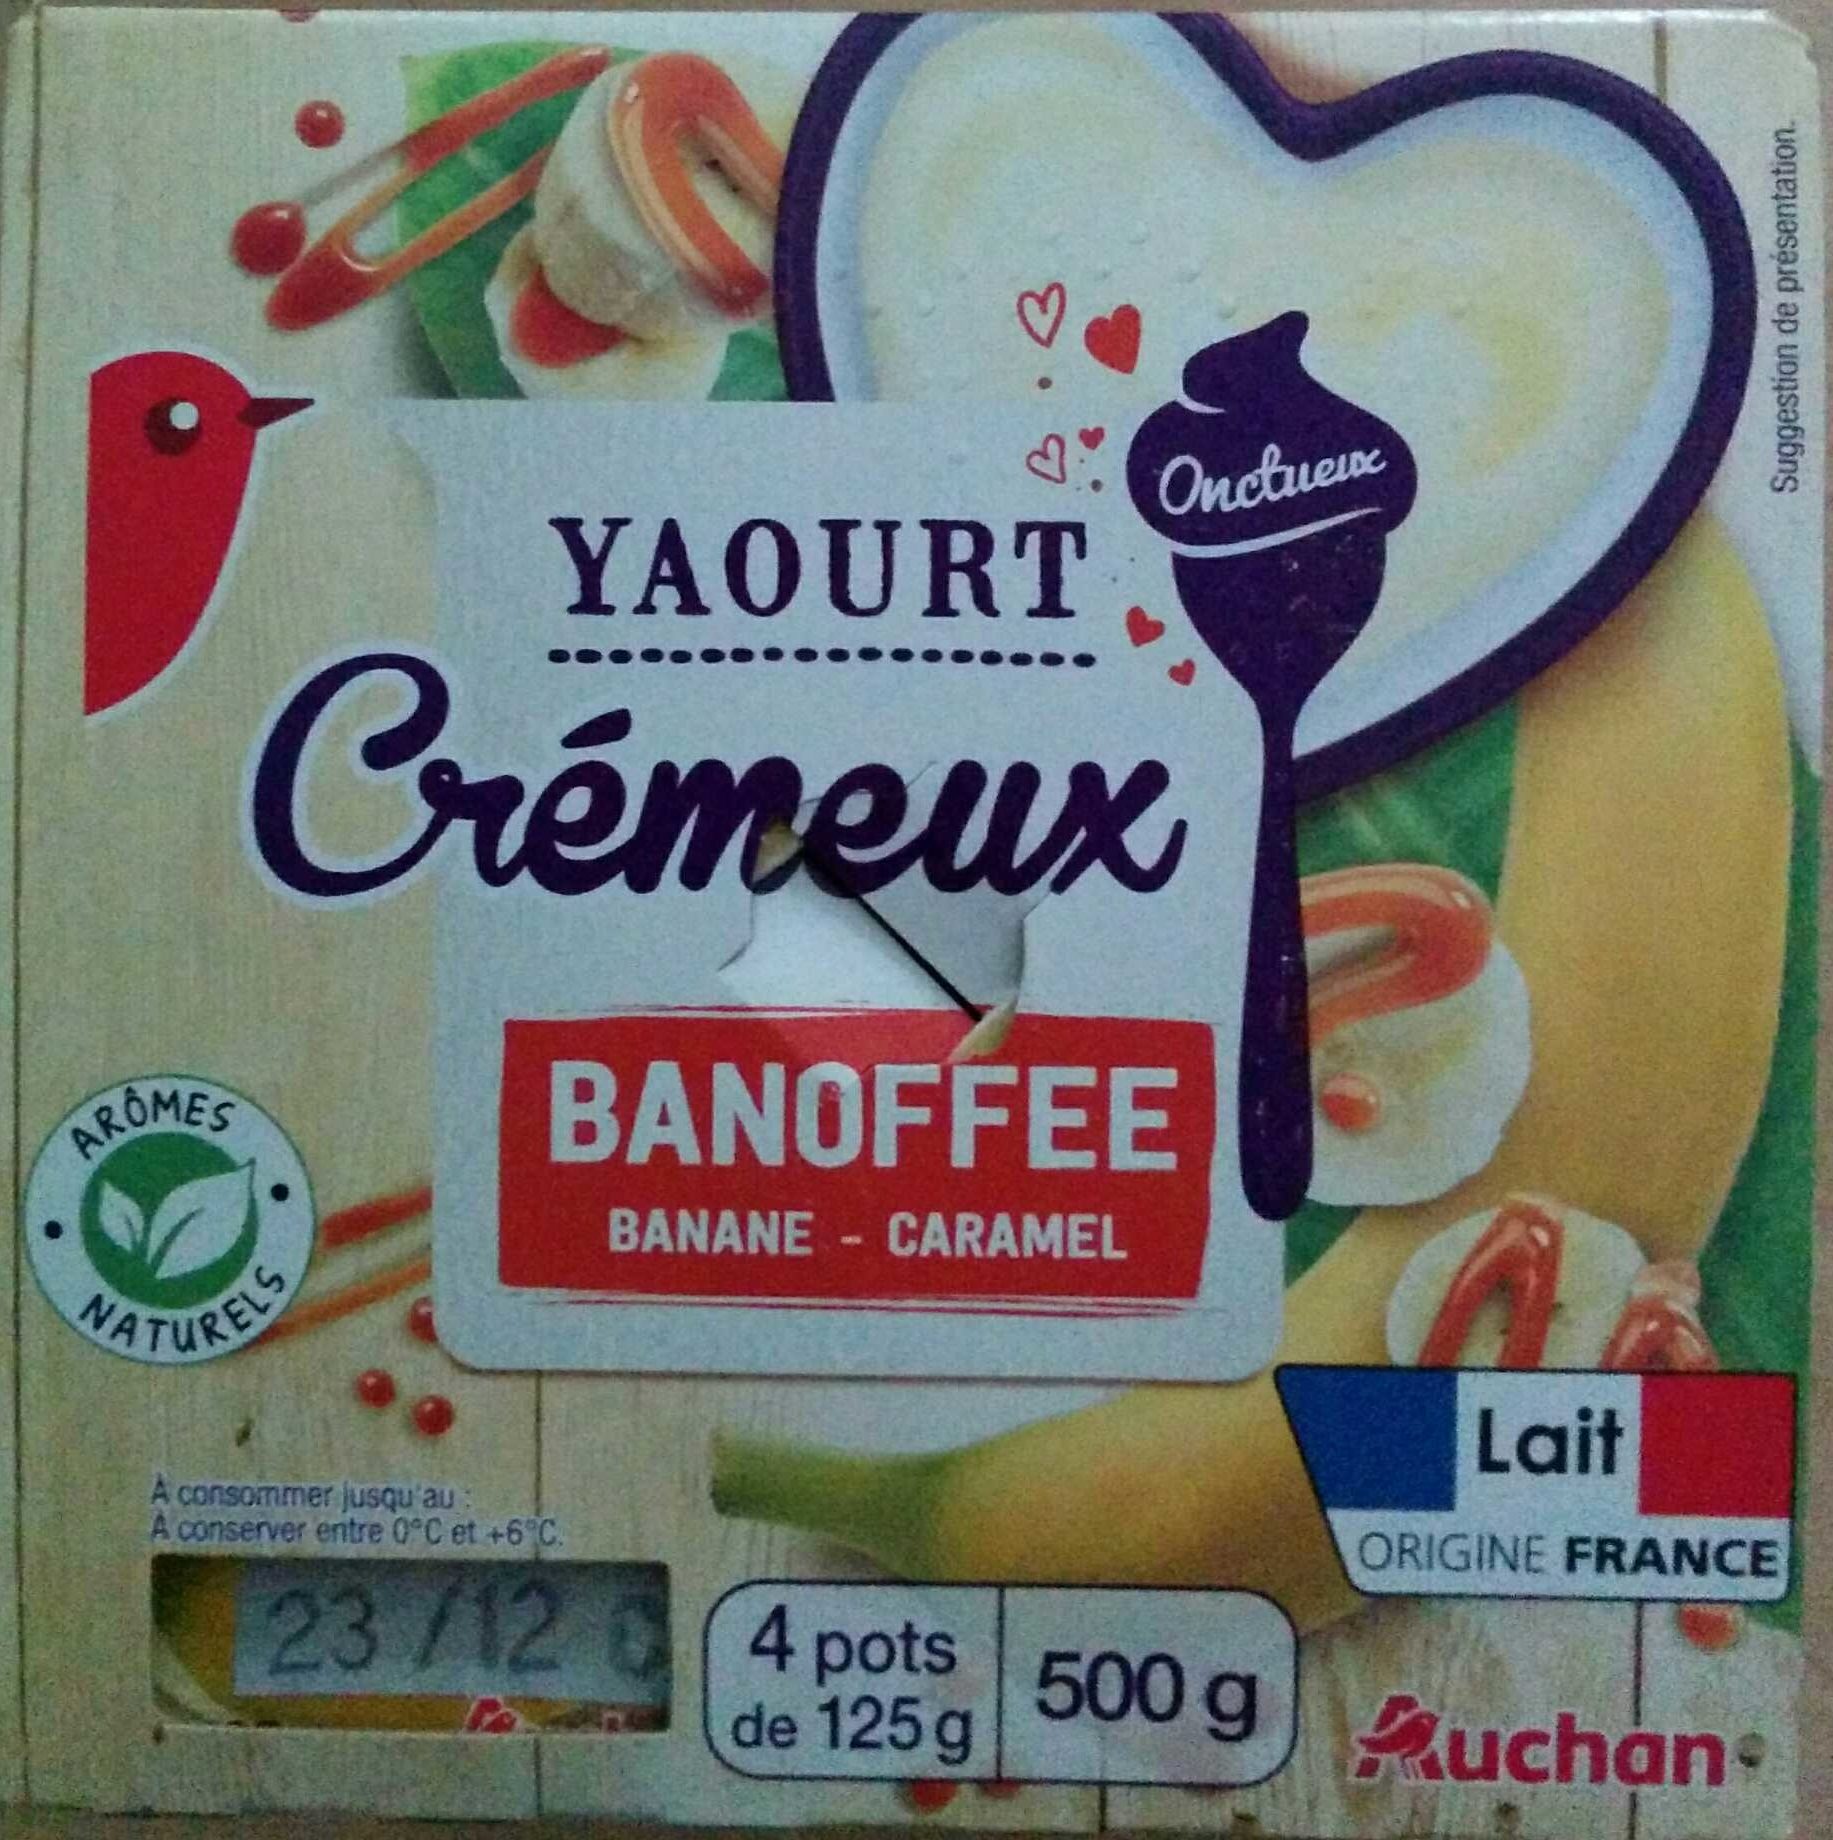 Yaourt crémeux banoffee banane caramel - Produit